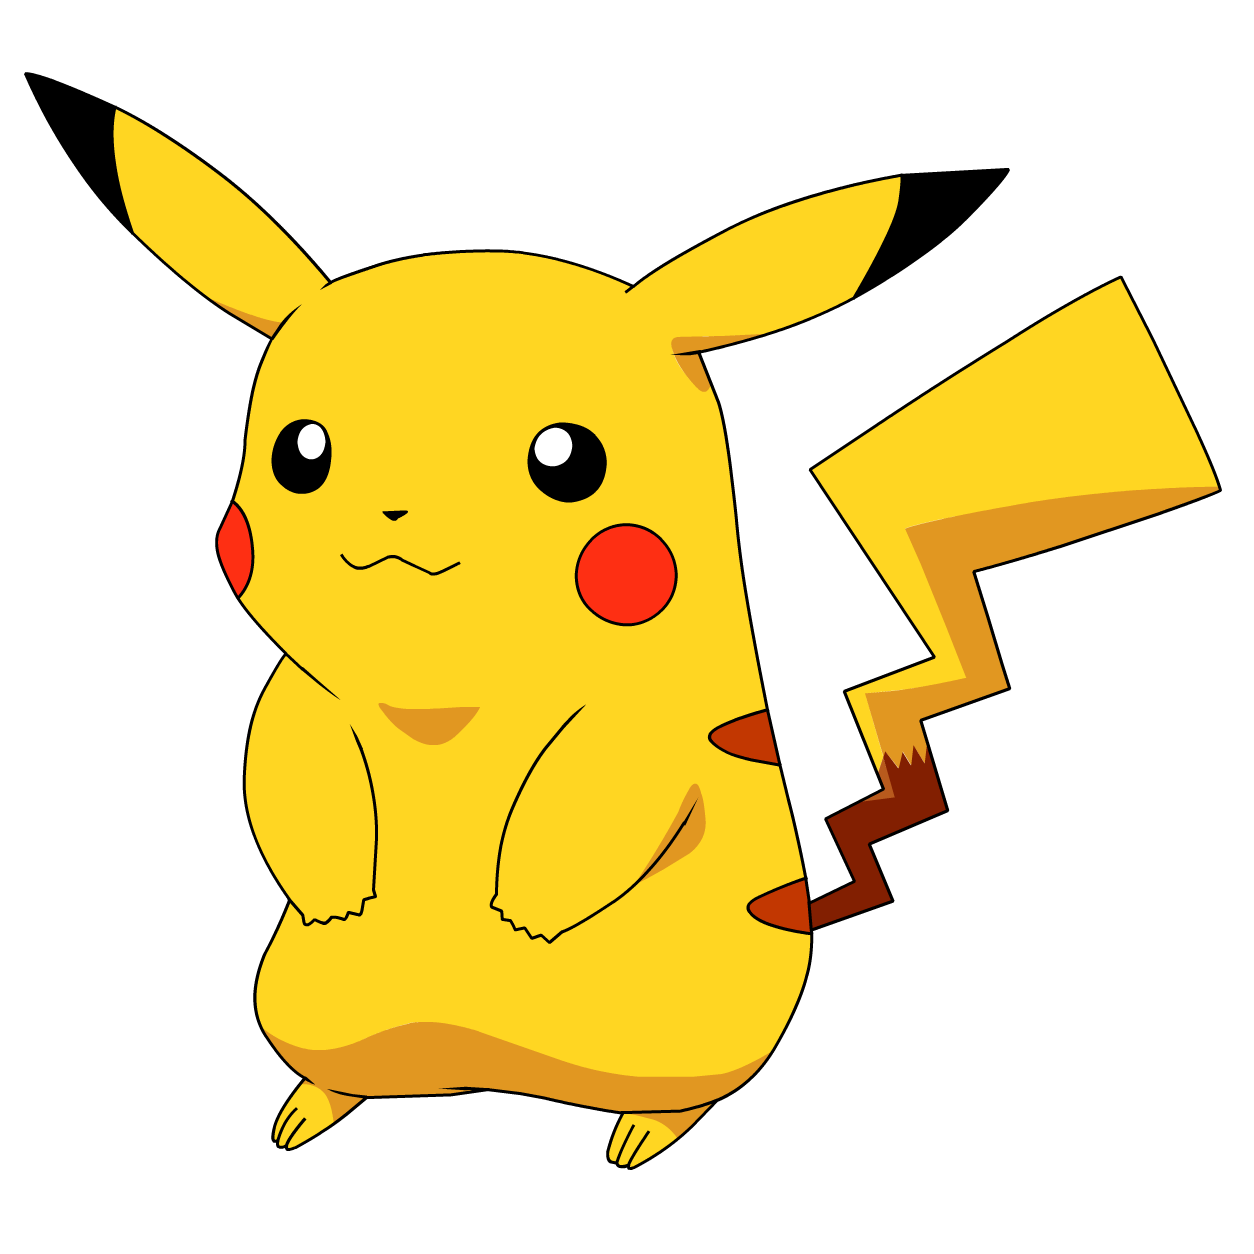 Pikachu: Brazilian right-back with Pokemon moniker scores 